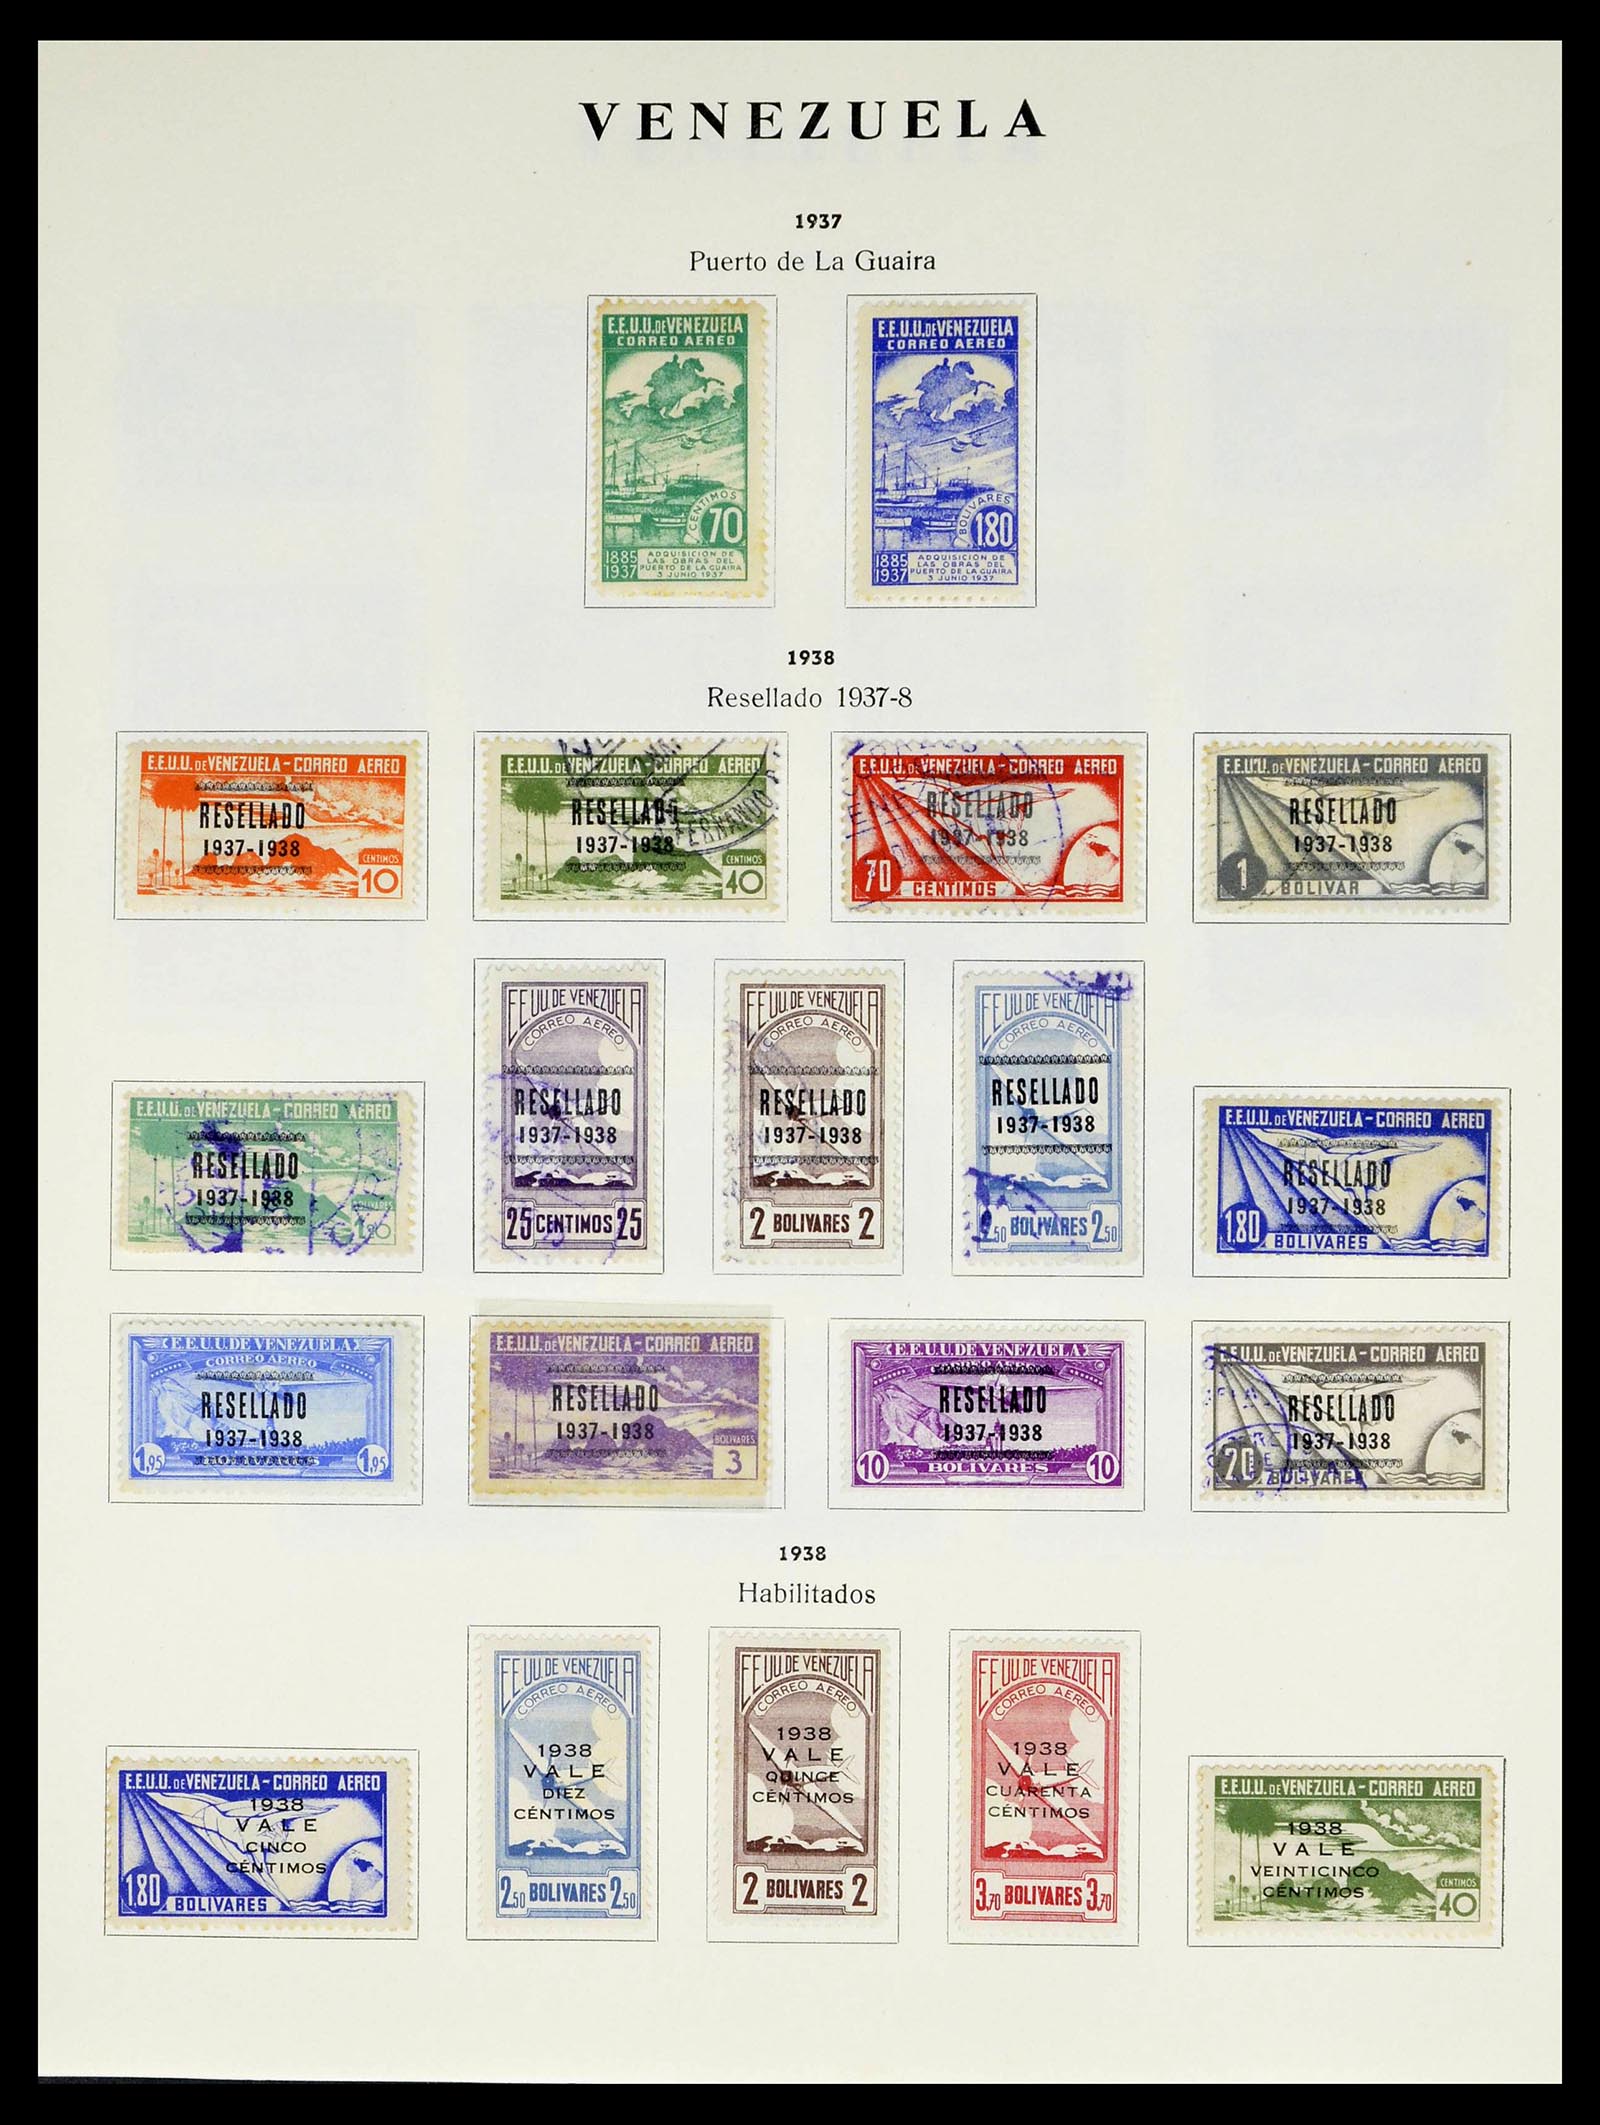 39223 0094 - Stamp collection 39223 Venezuela 1859-1984.